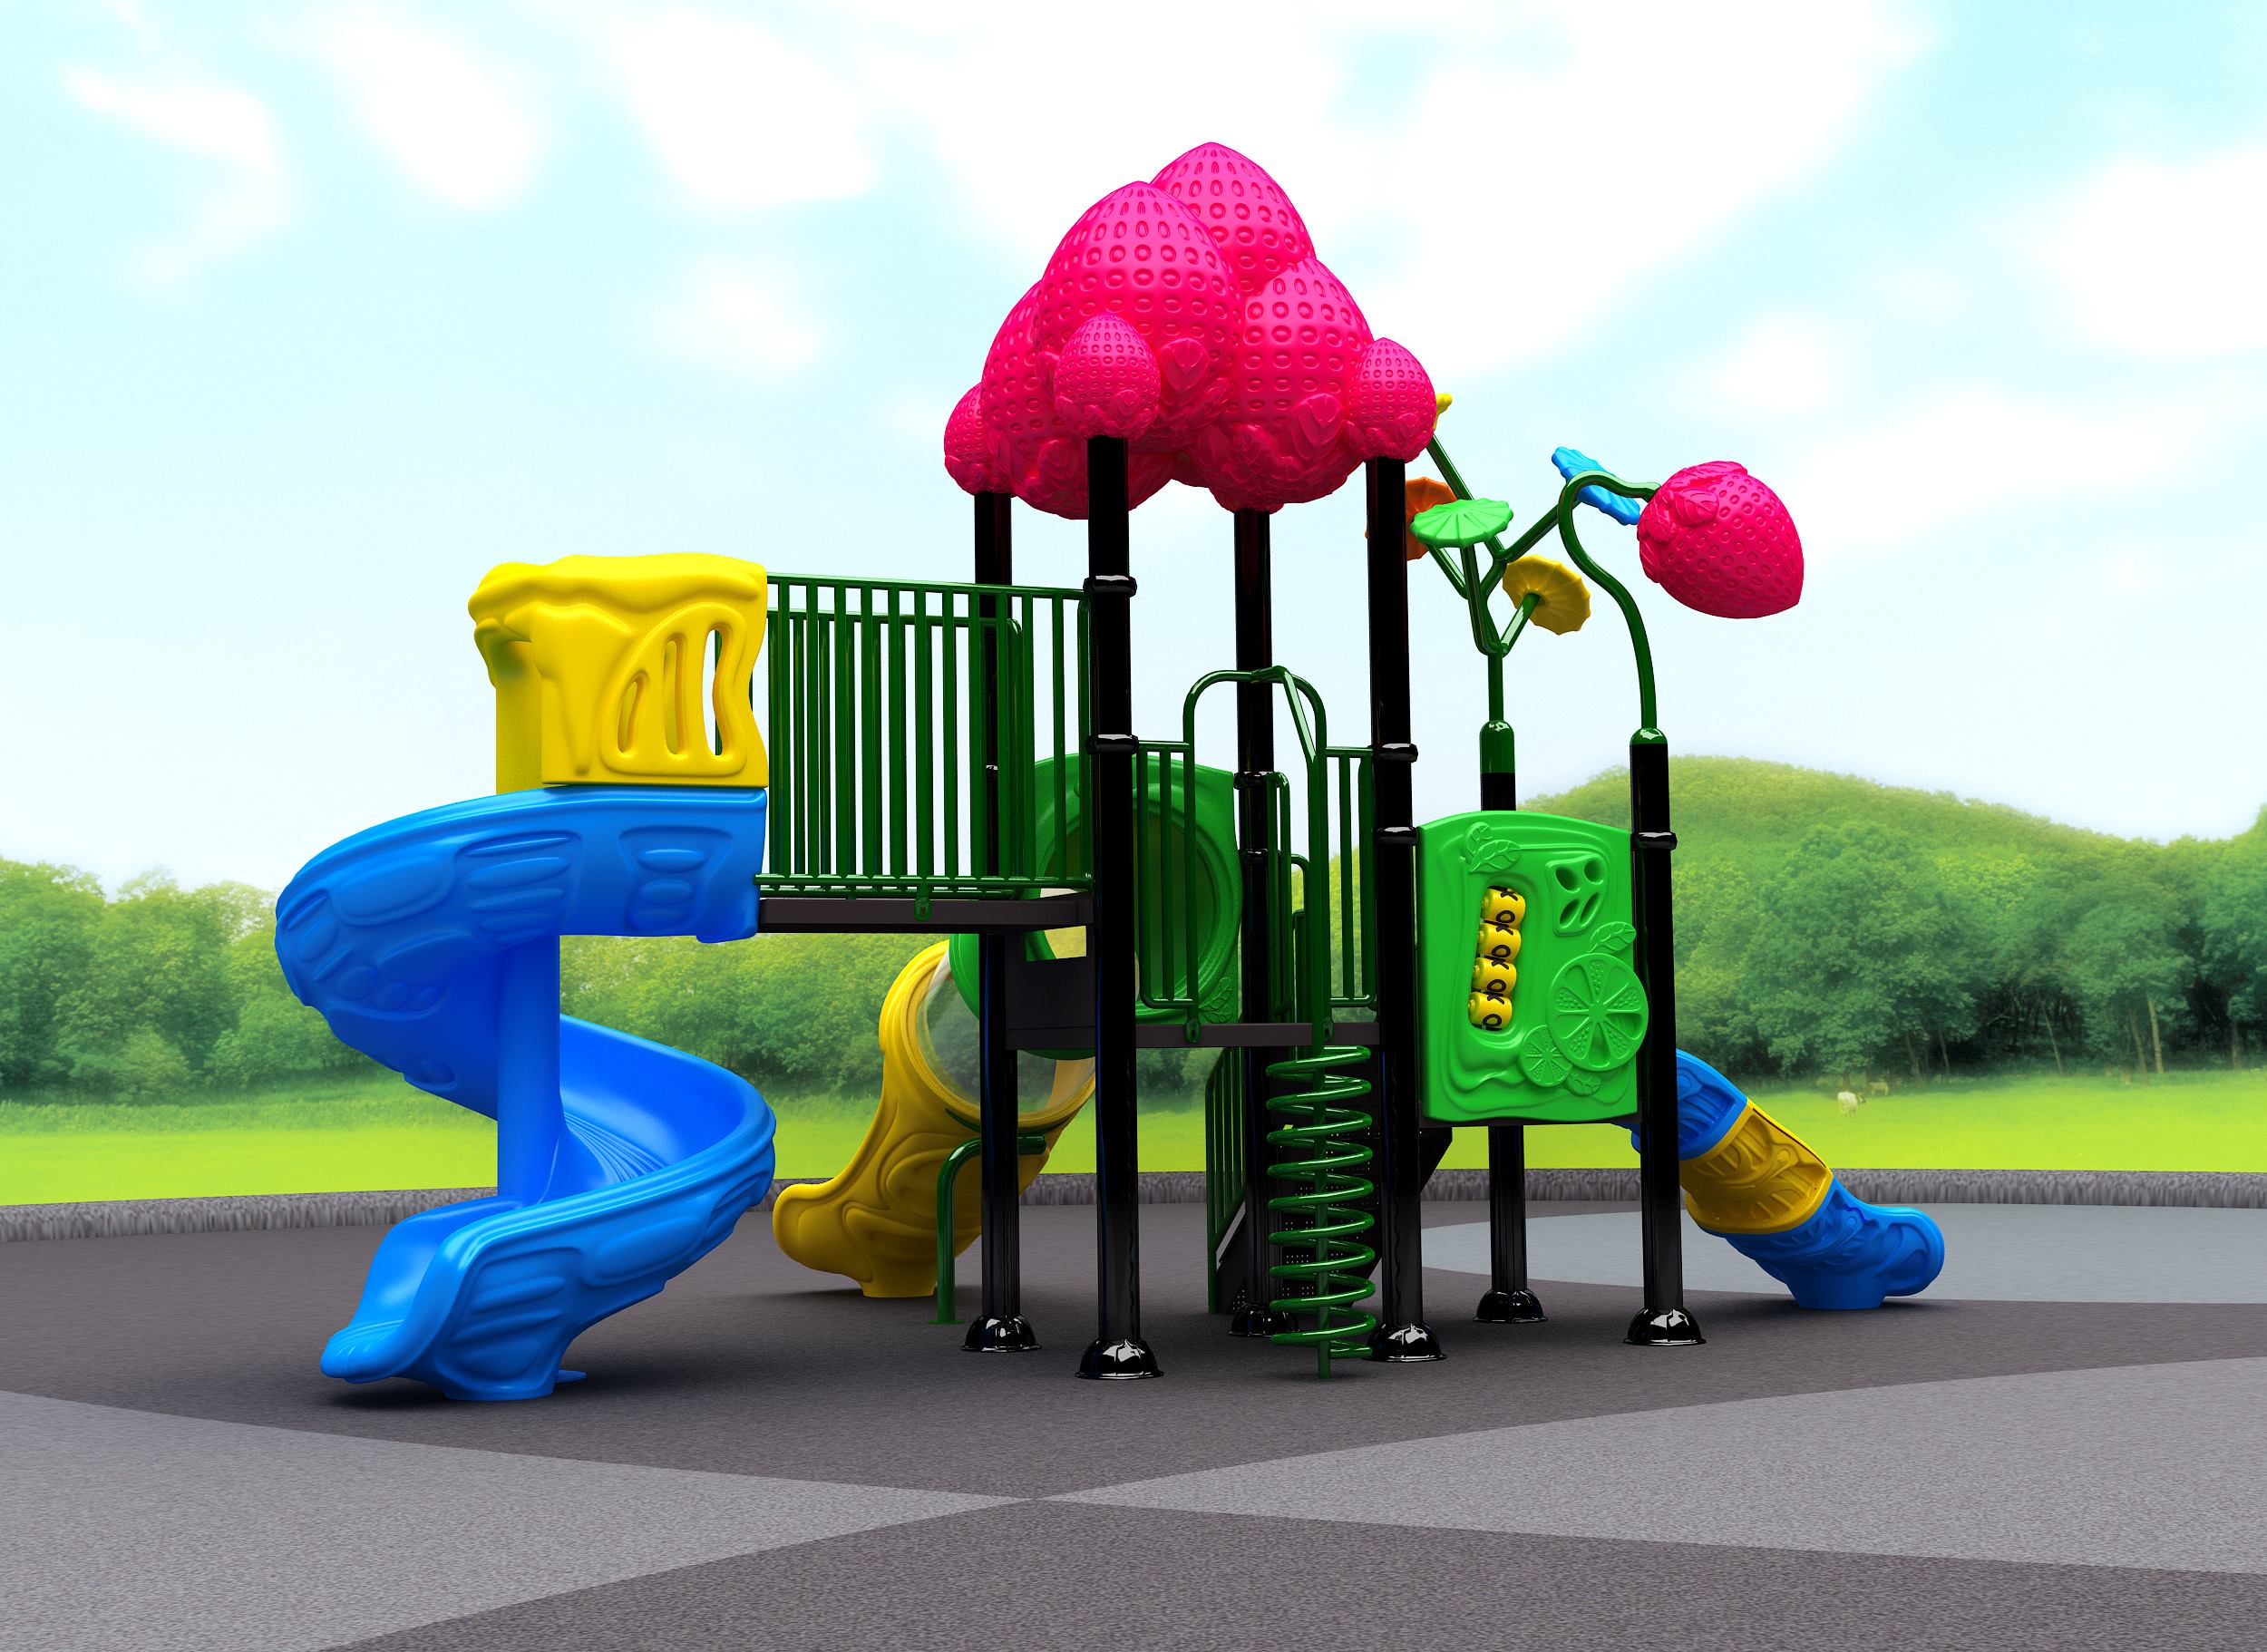 SOZA PlayGround parques infantiles juegos para niños parques plásticos parques plasticos parques infantiles bogota parques infantiles bogotá parques infantiles colombia